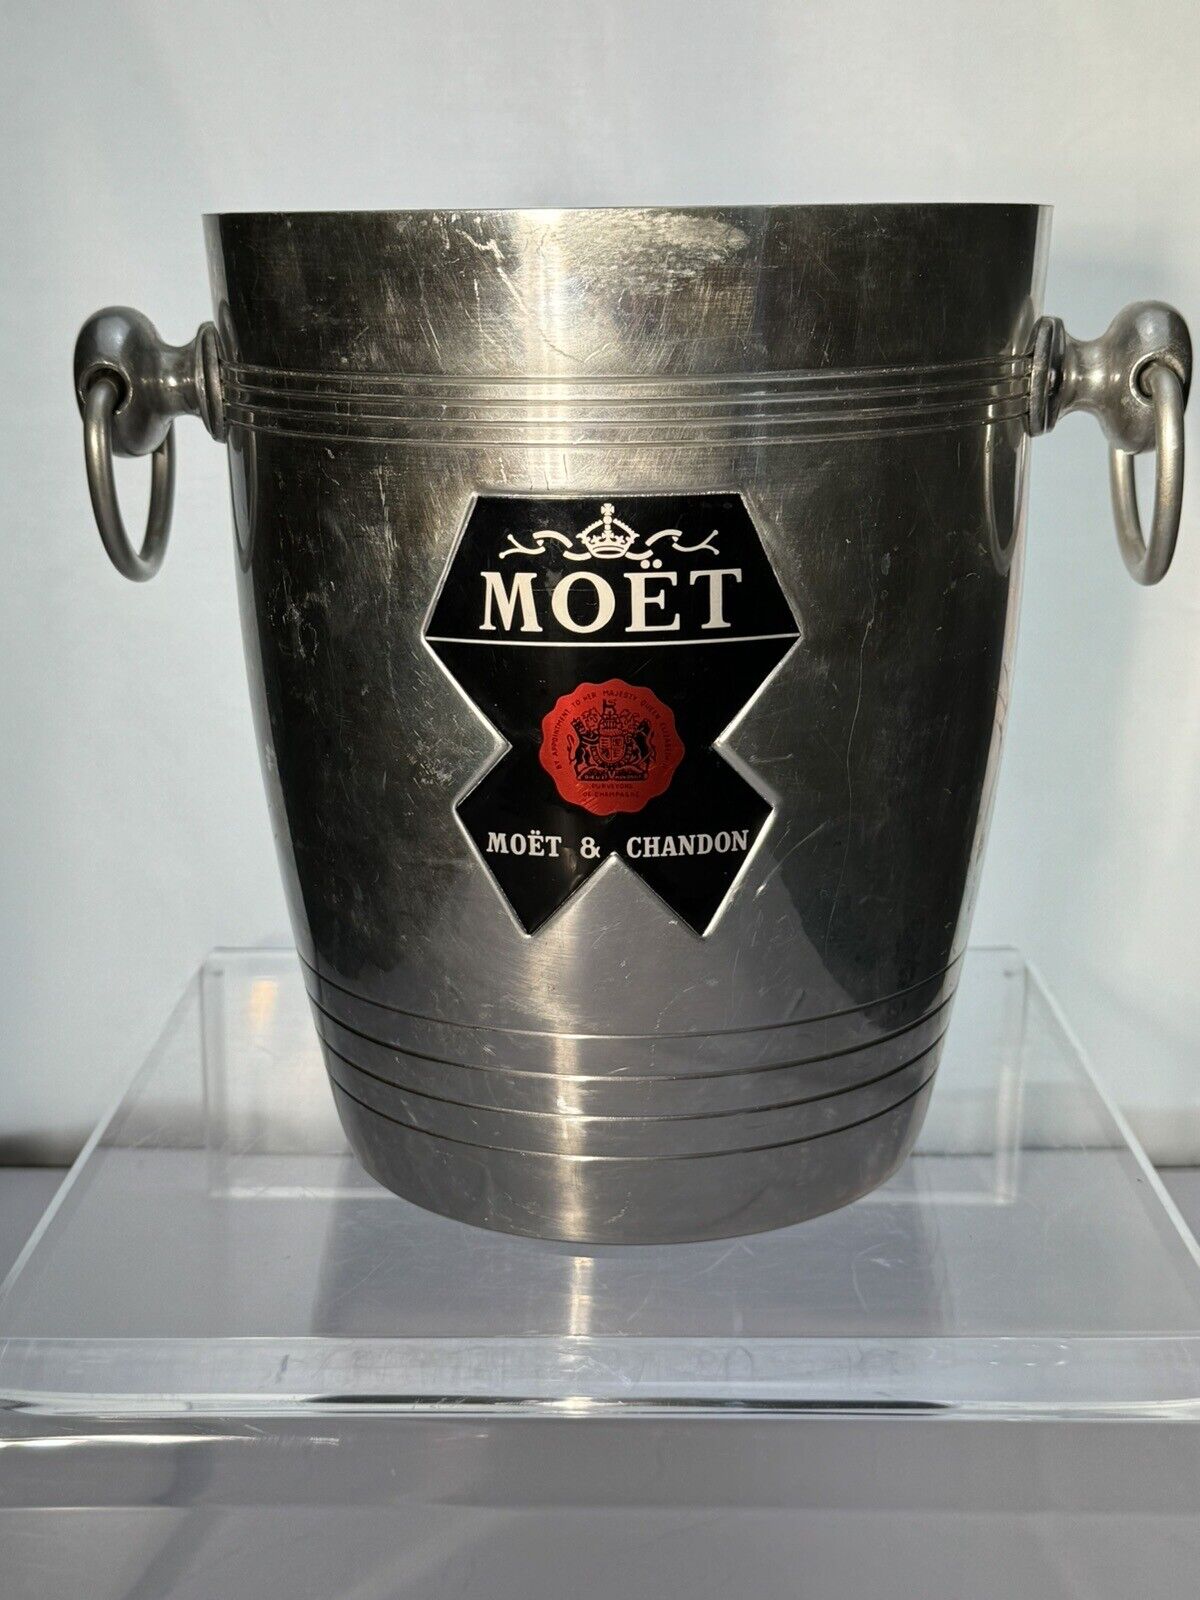 Moet & Chandon Aluminum Champagne Ice Bucket Made in France 1970’s VTG Barware